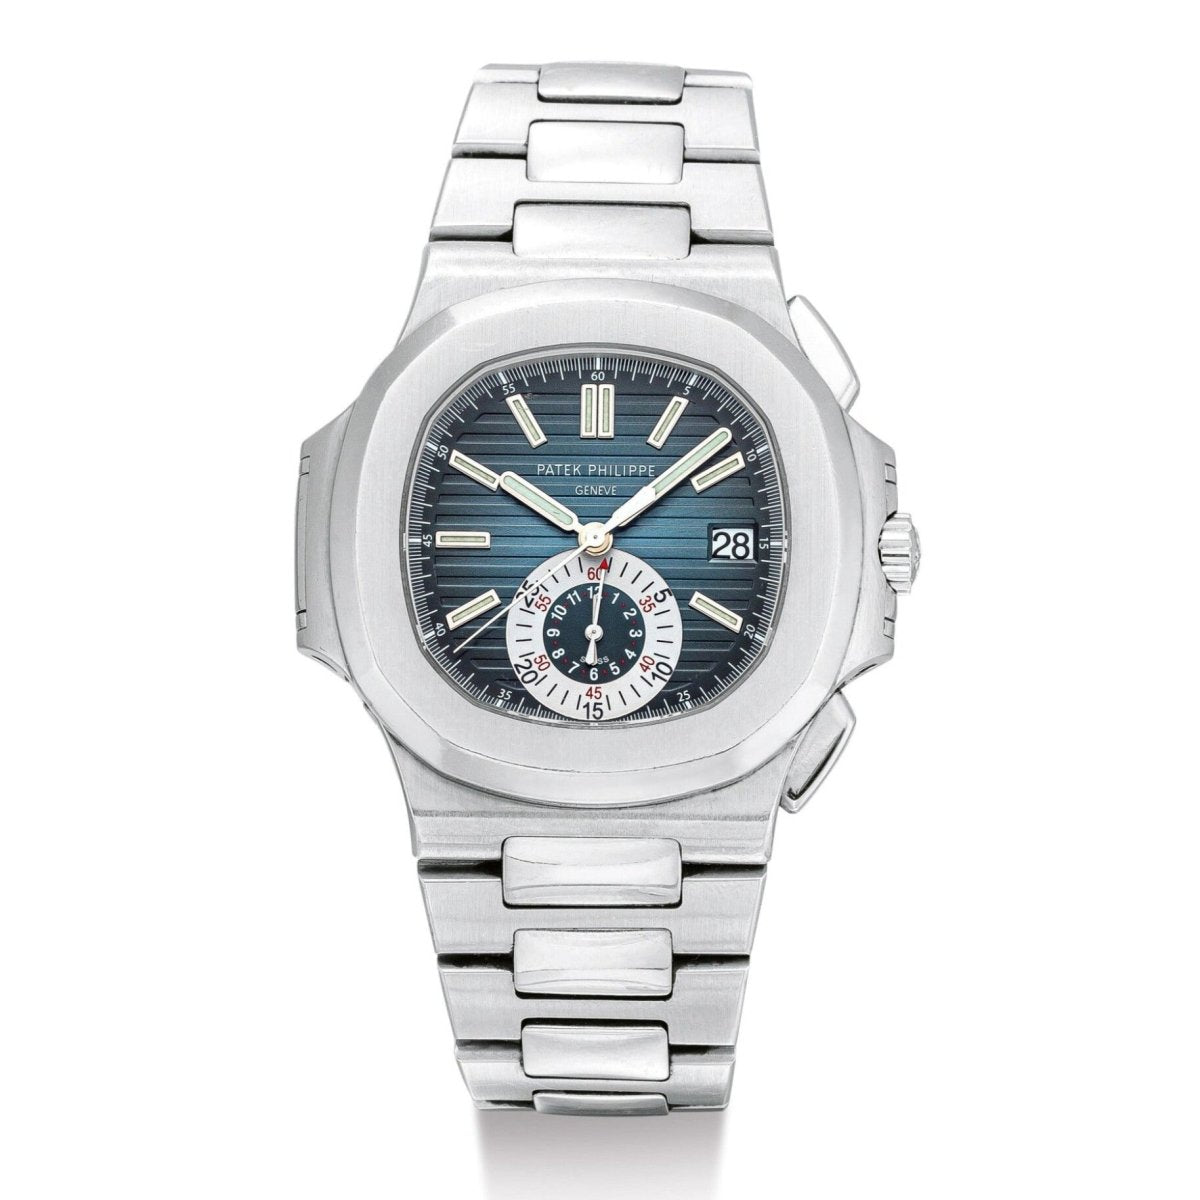 PP 5980/1A-001 - AOM Luxury Watch